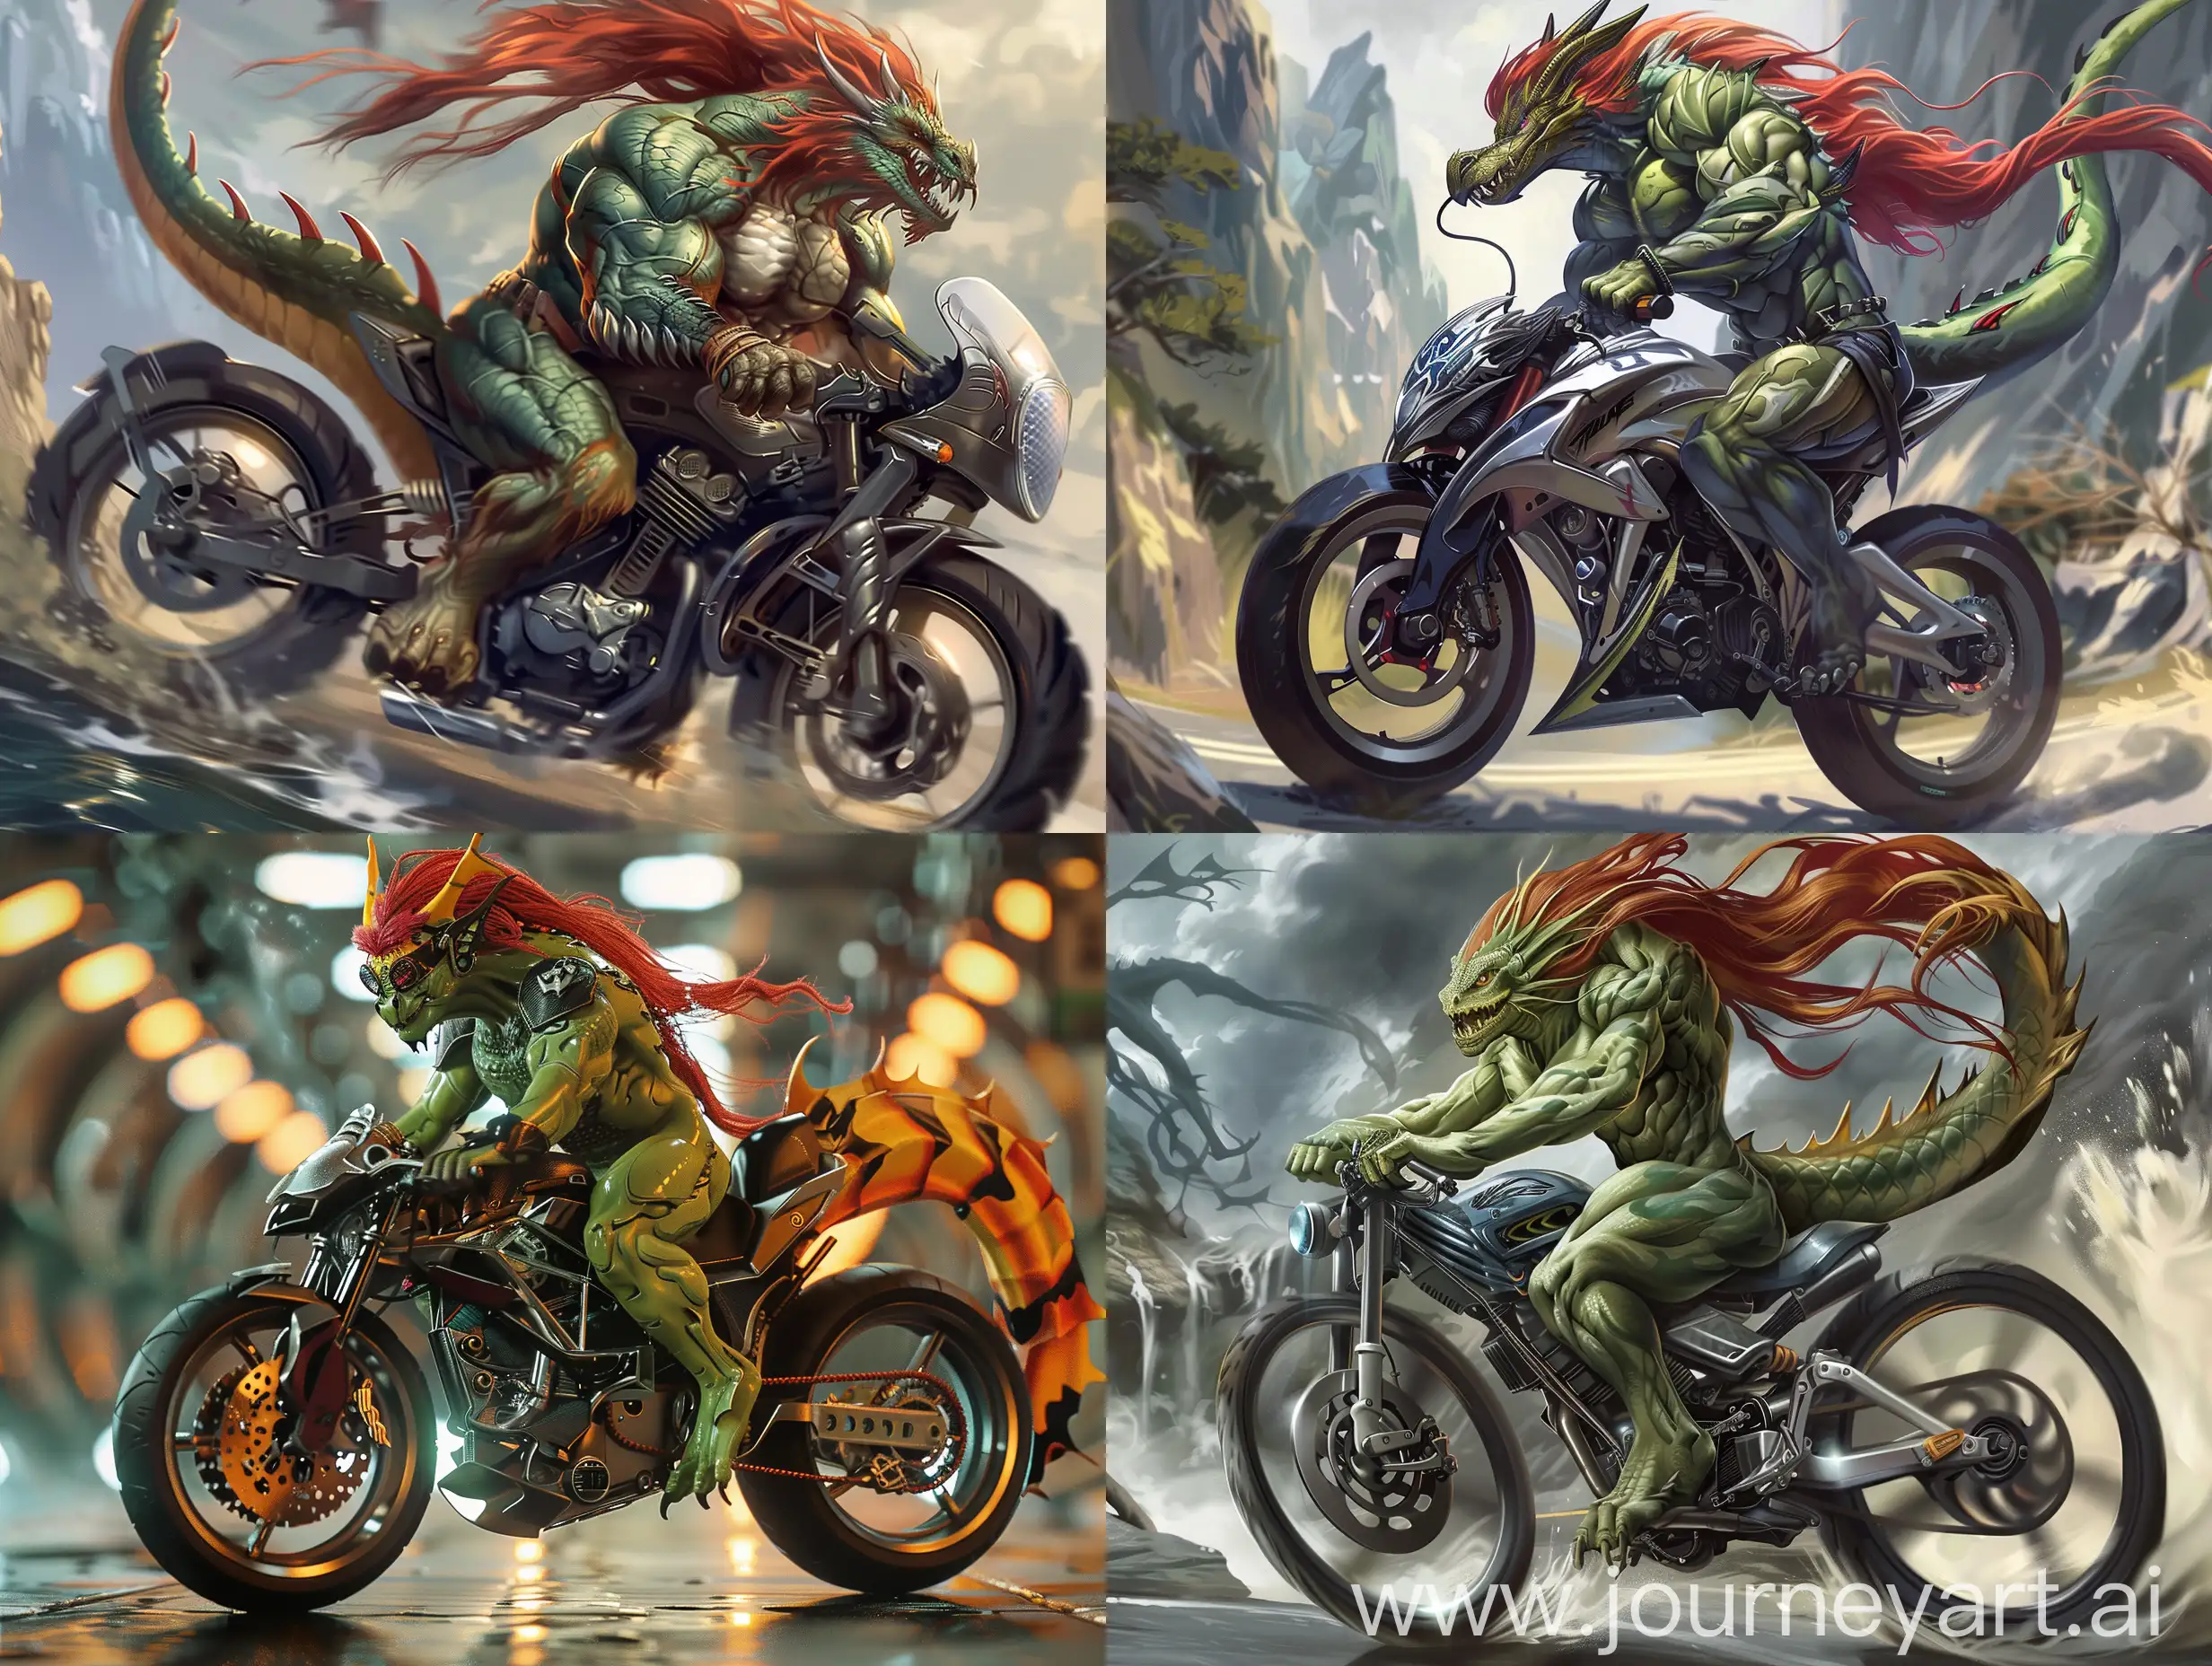 Muscular-Dragon-Man-Riding-Sports-Bike-in-High-Definition-Detail